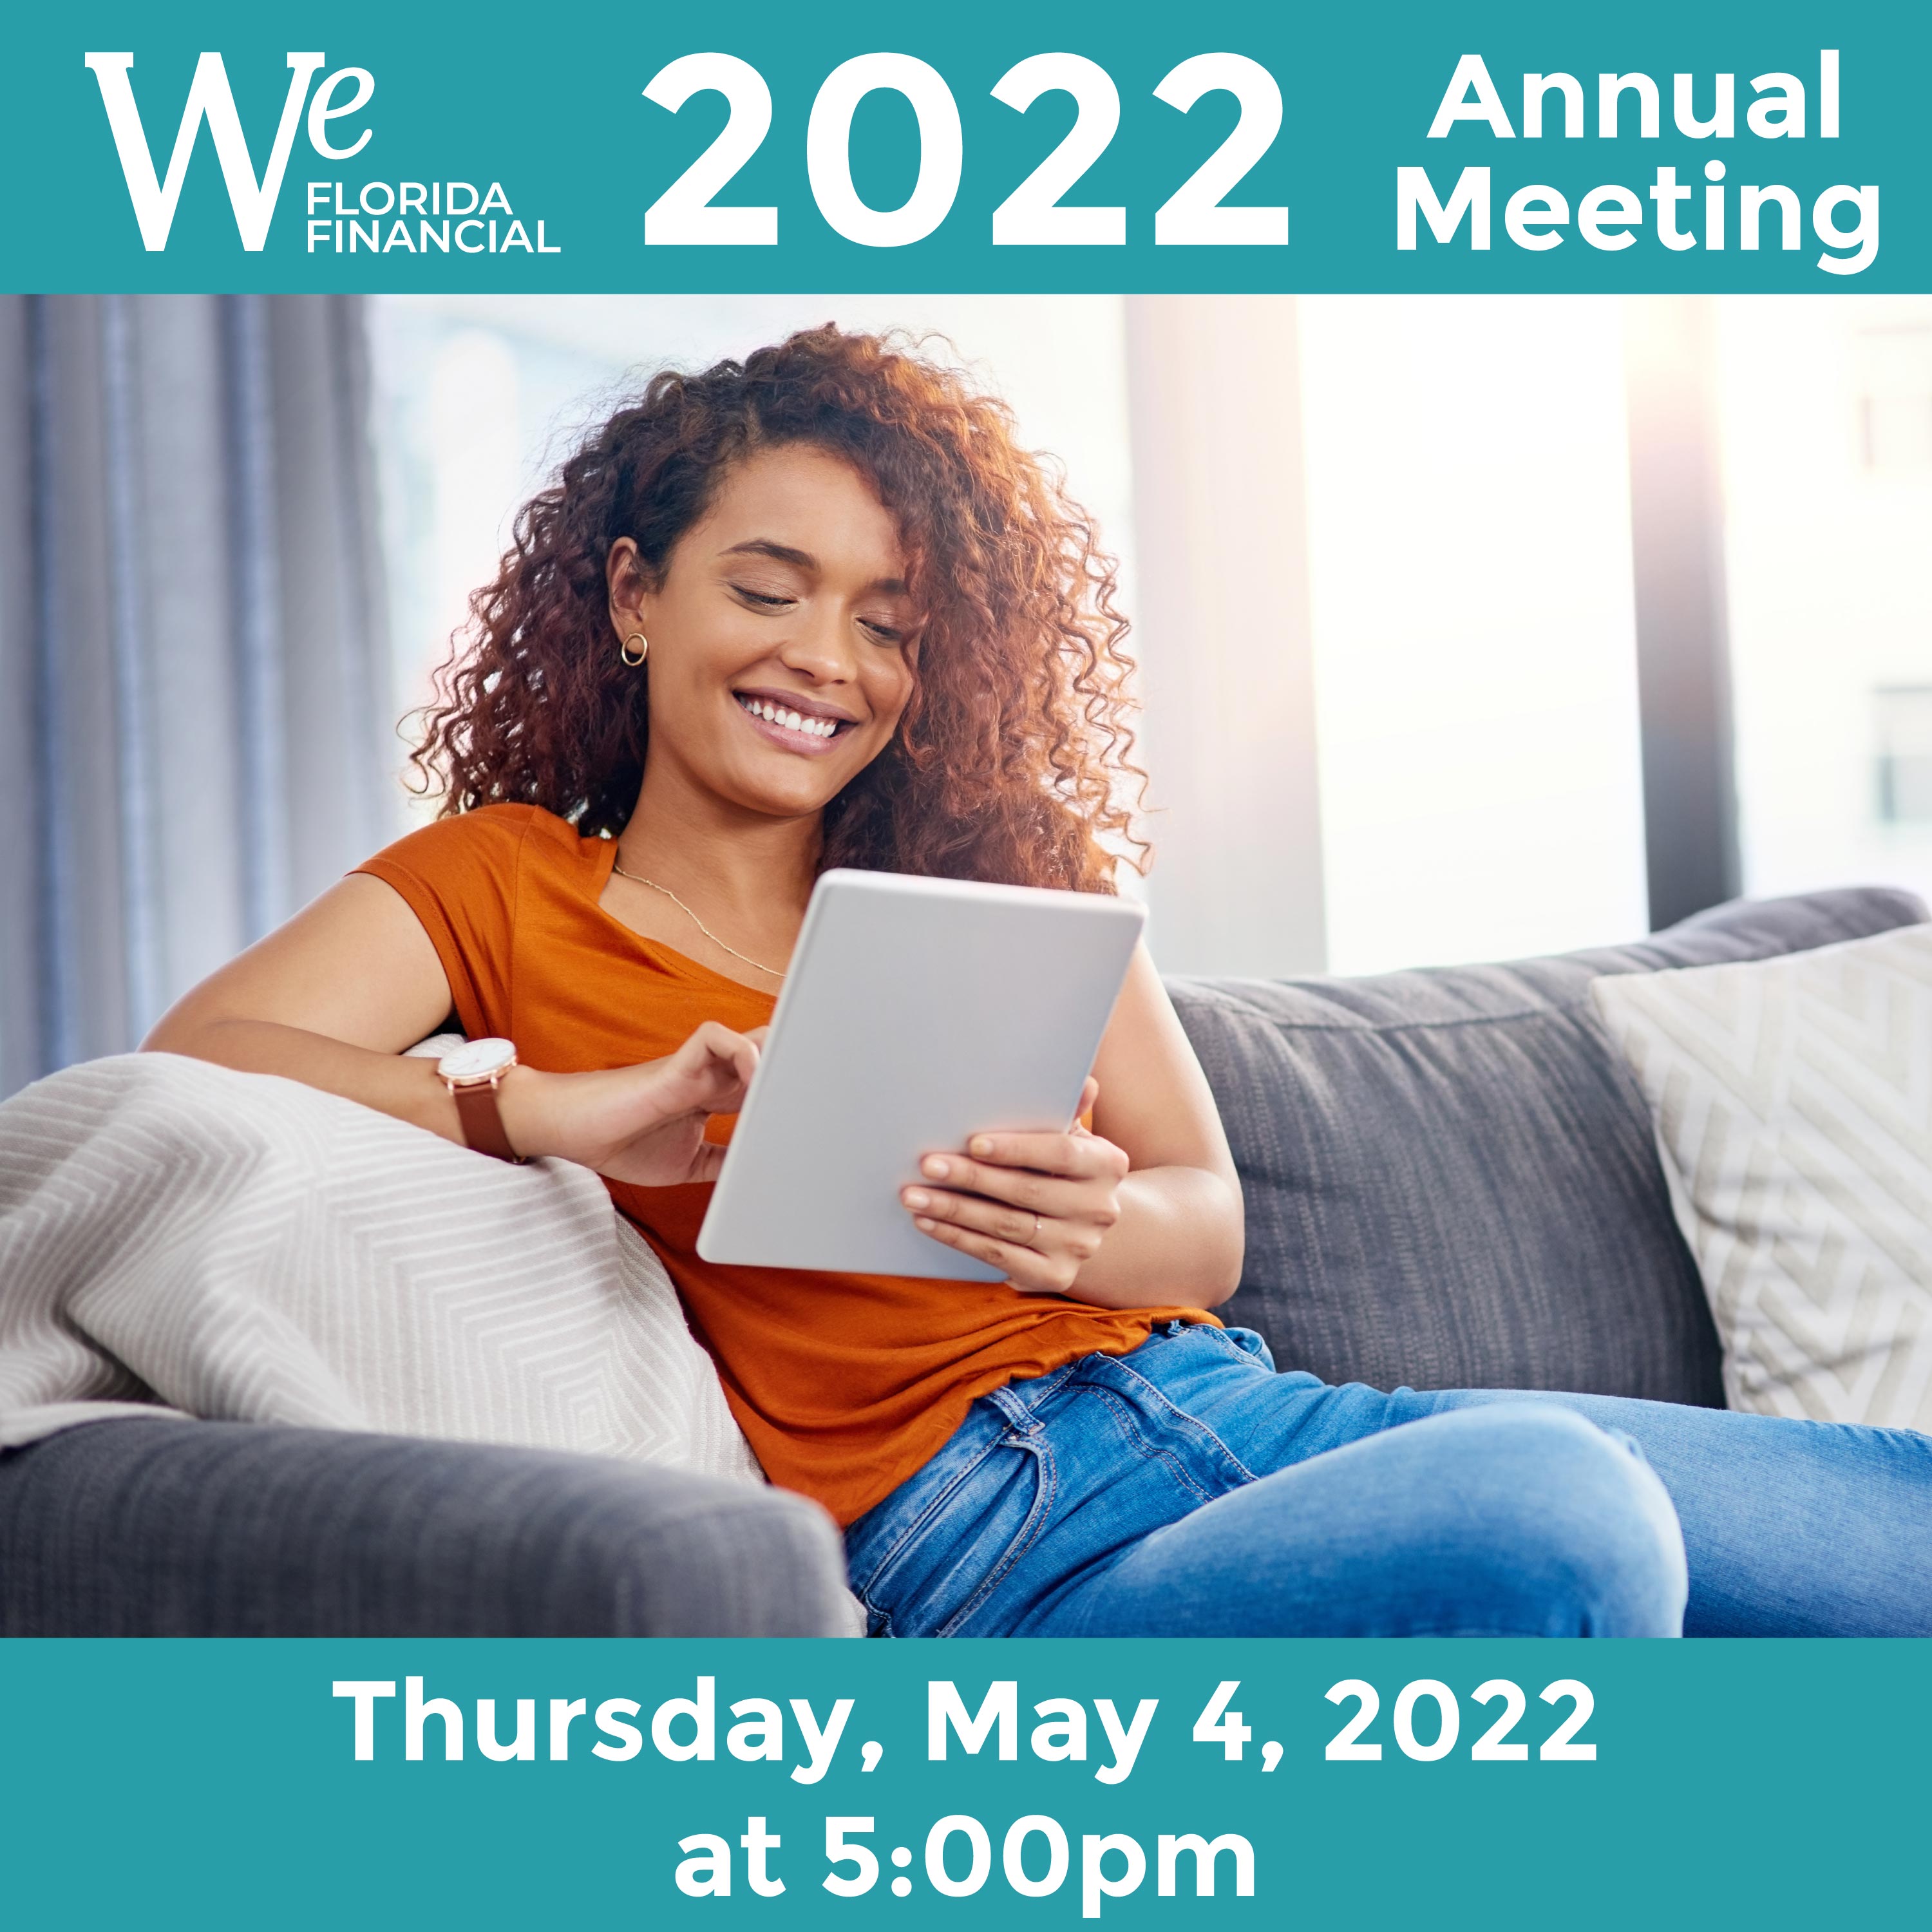 2022 Annual Meeting Thursday, May 4, 2022 at 5:00pm